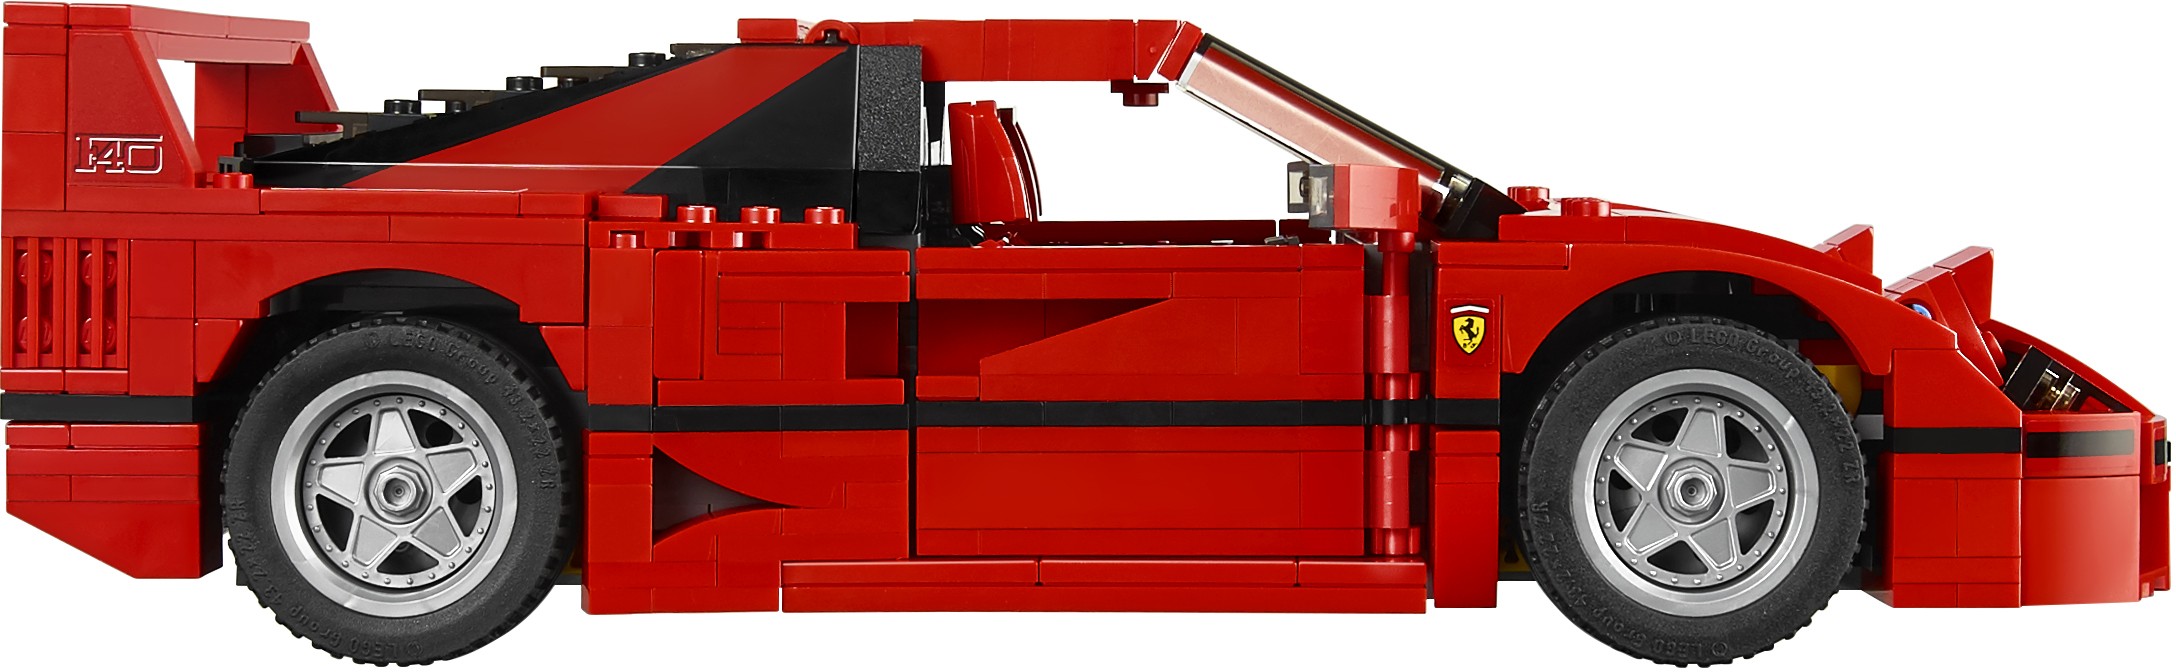 LEGO 10248 Creator Expert Ferrari F40 Construction Set SEALED Fast Shipping